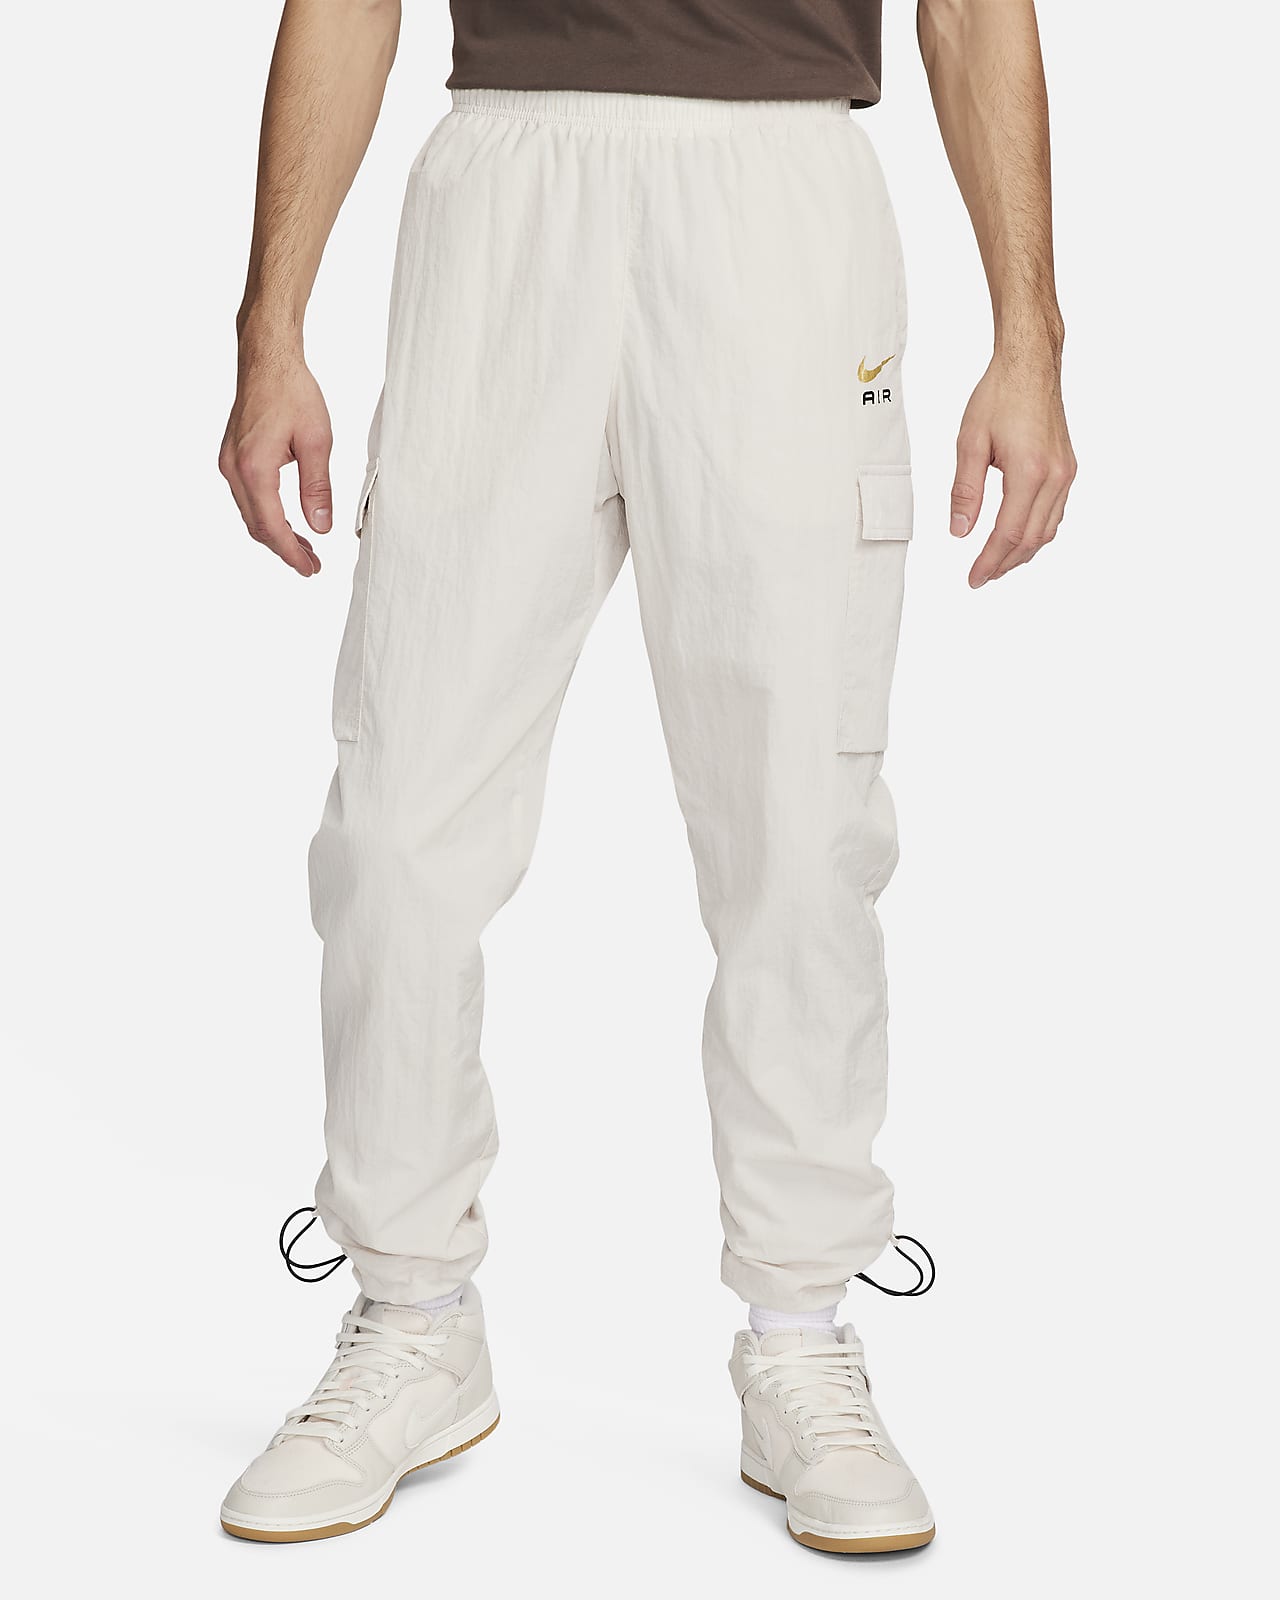 Pantaloni leggeri in tessuto Nike Air – Uomo